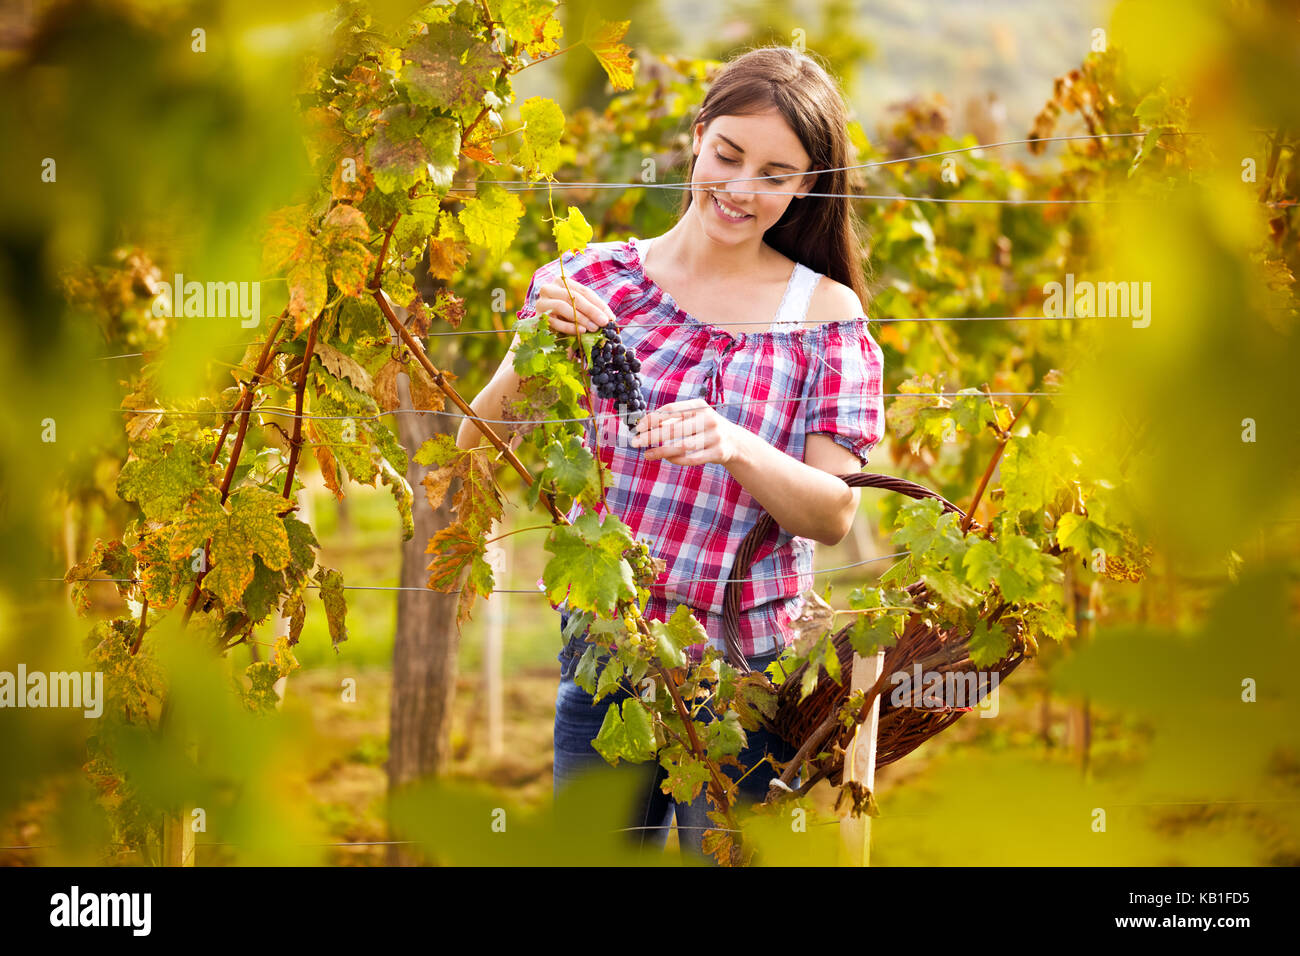 young woman grape picker in vineyard Stock Photo